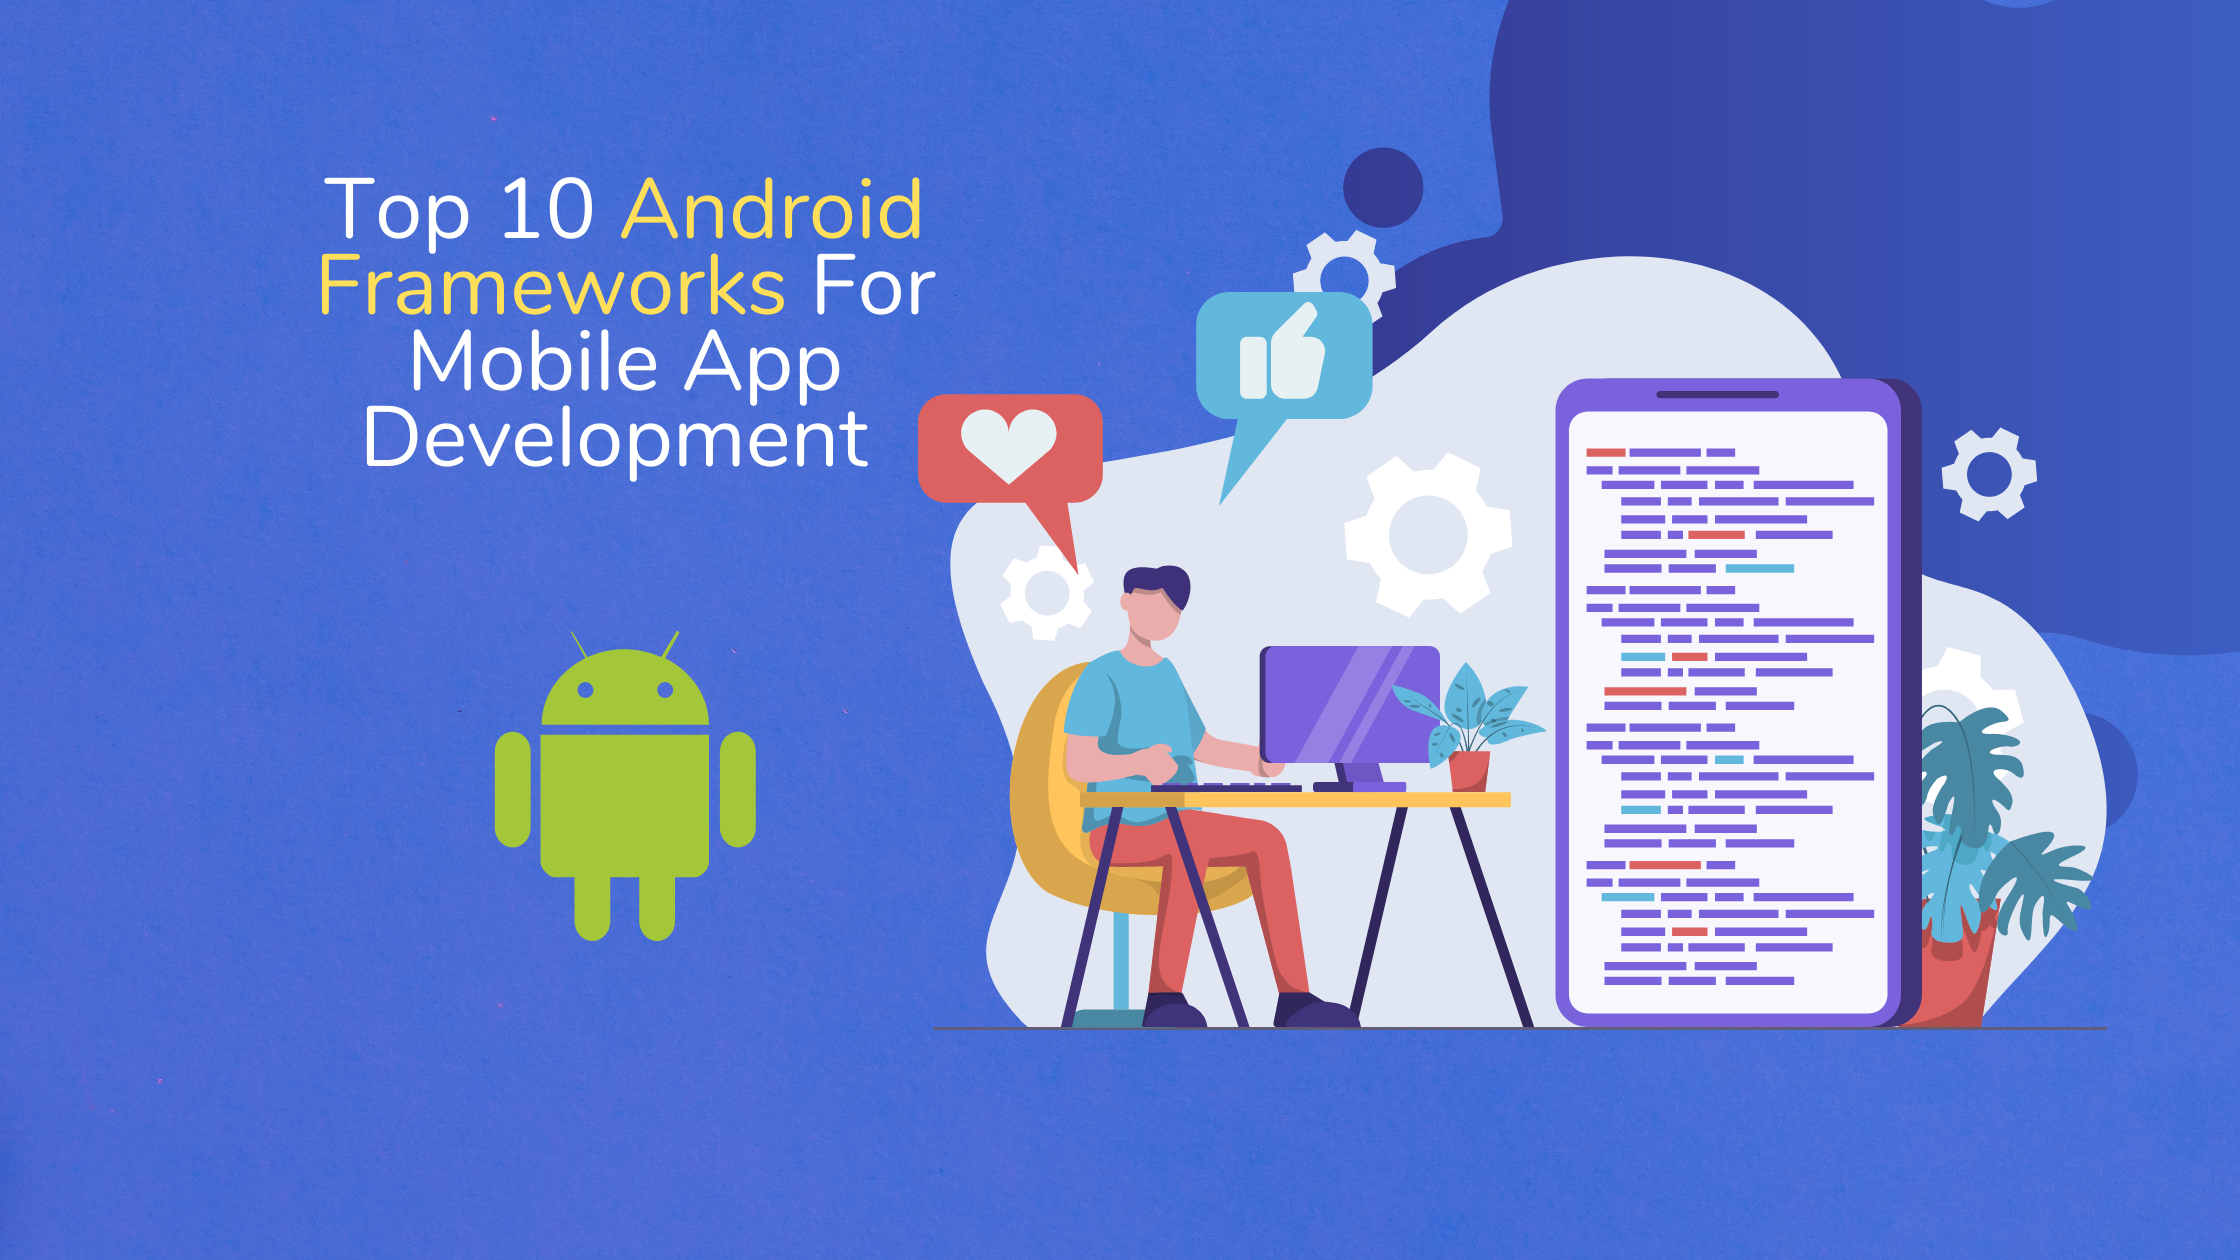 Design for Android Frameworks